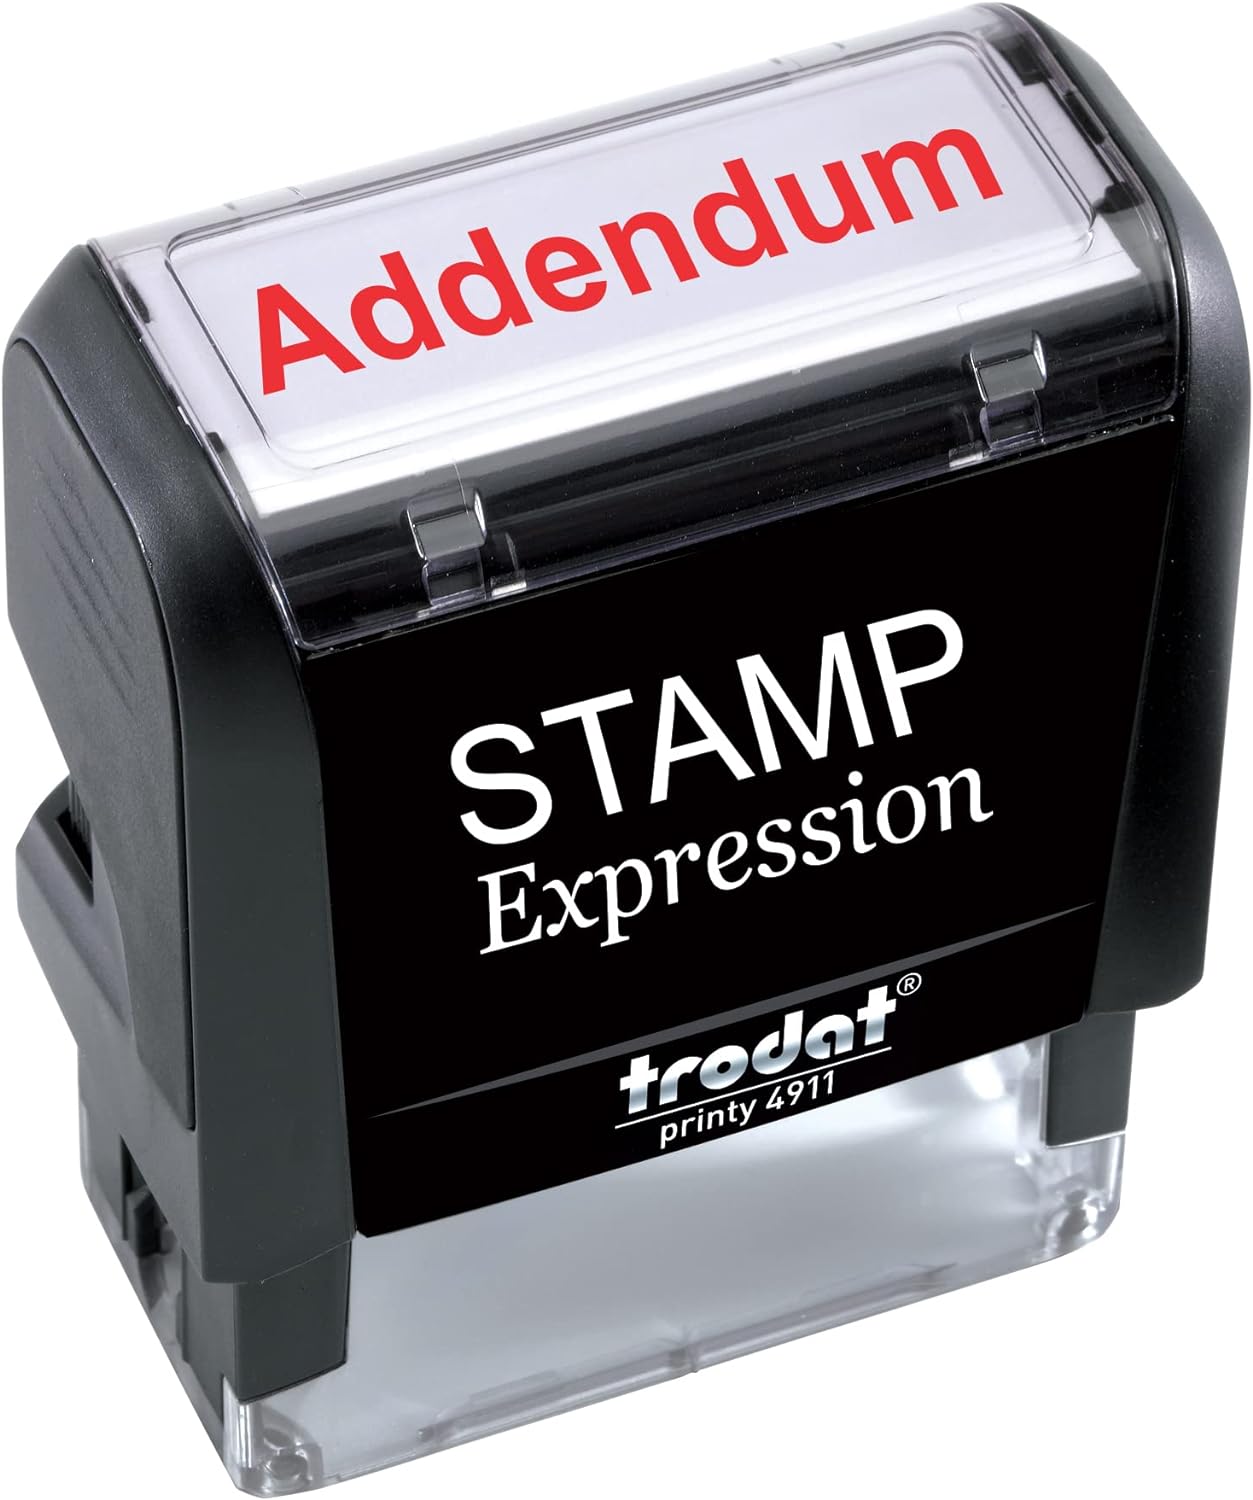 Addendum Office Self Inking Rubber Stamp (SH-5198)